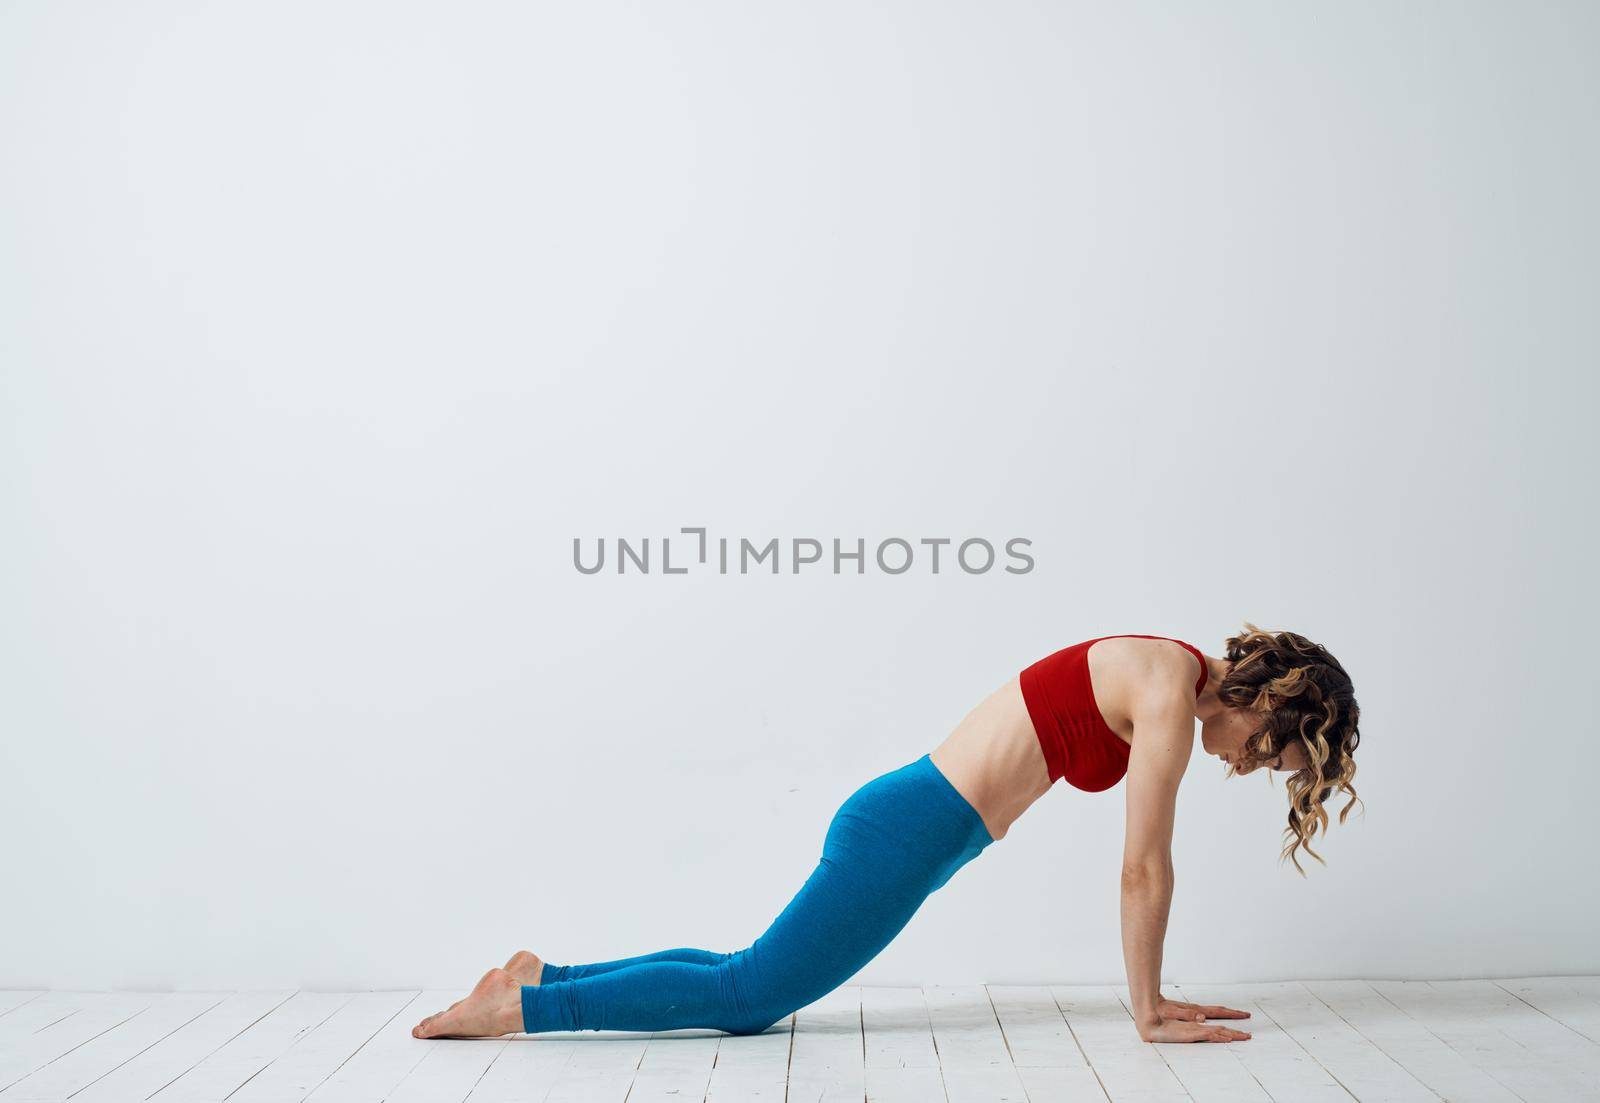 Woman doing gymnastics exercises yoga asana sportswear. High quality photo